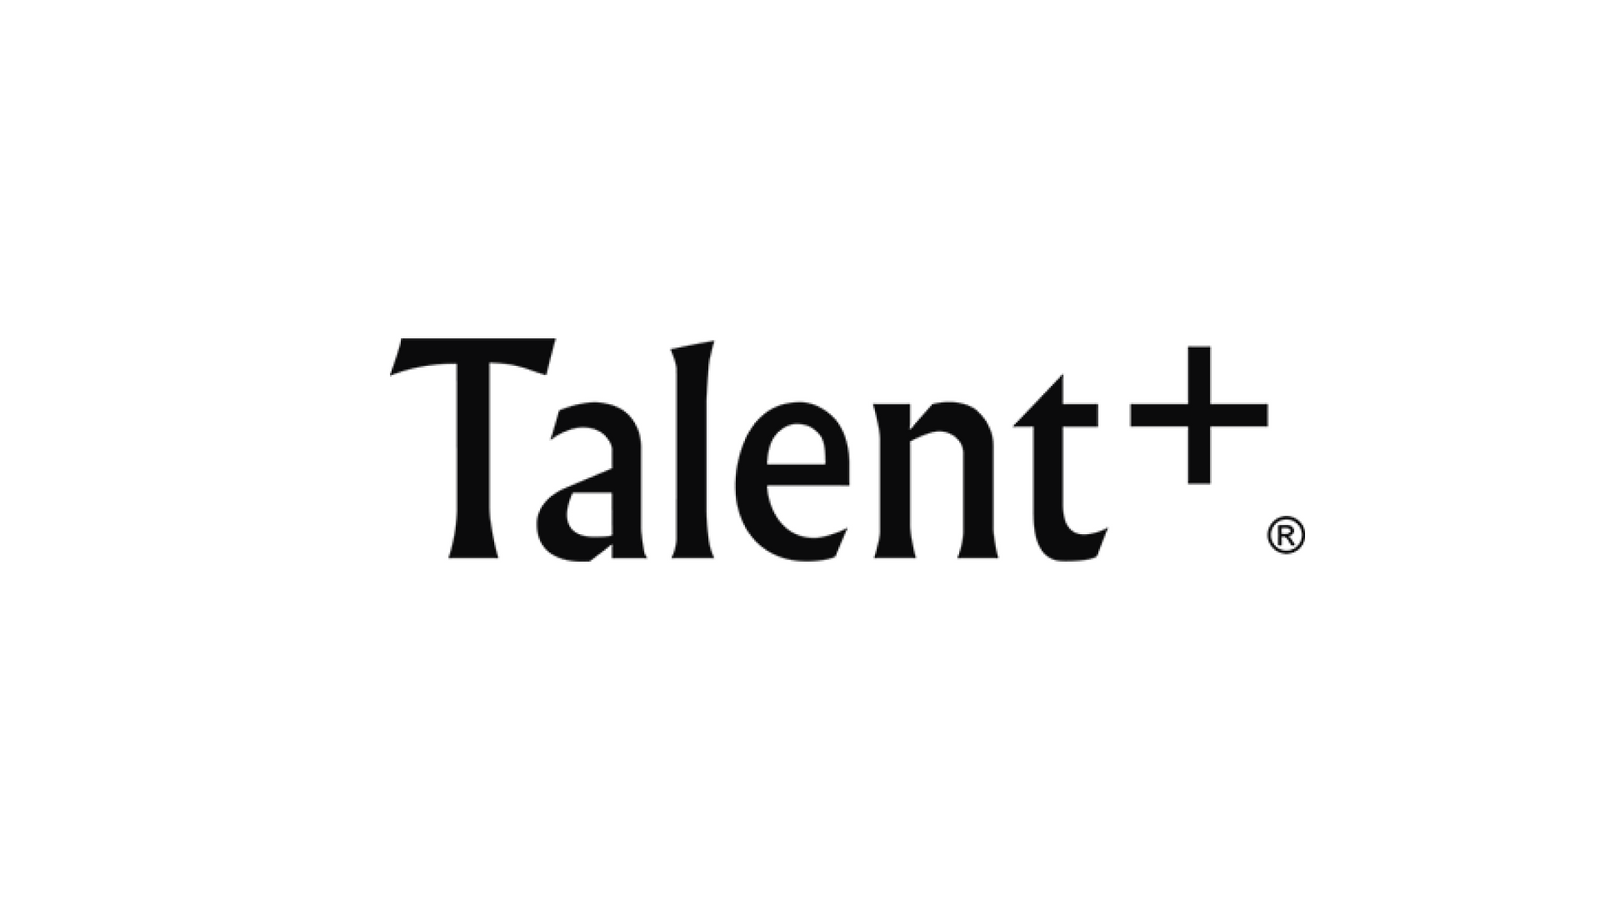 Talent Plus